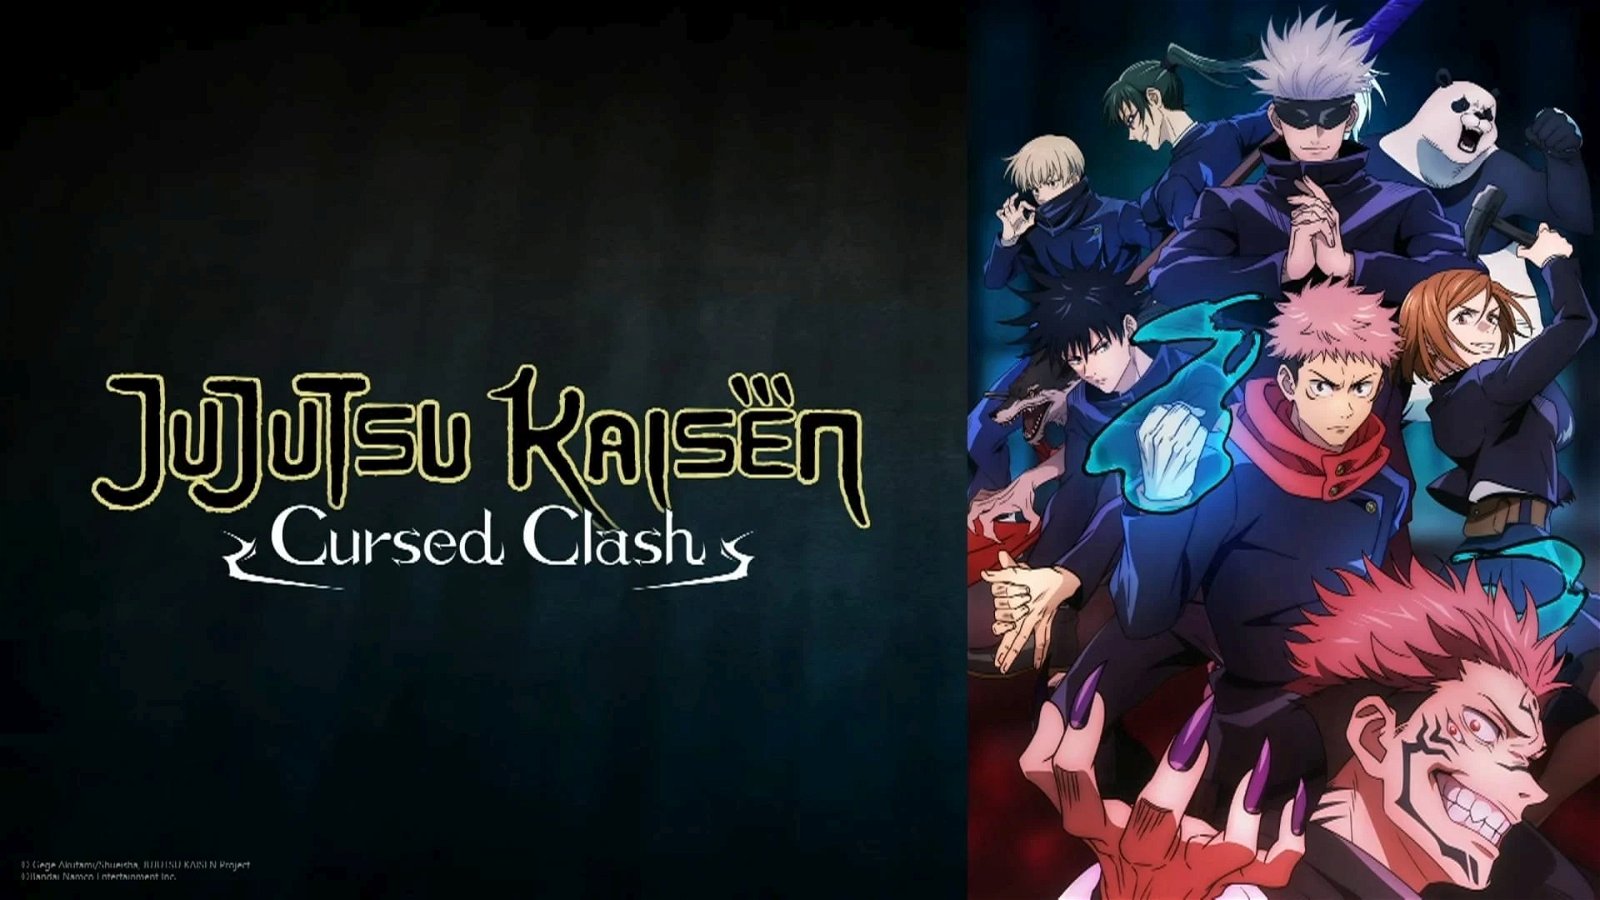 New Jujutsu Kaisen Cursed Clash Trailer Showcases Gameplay and New Character